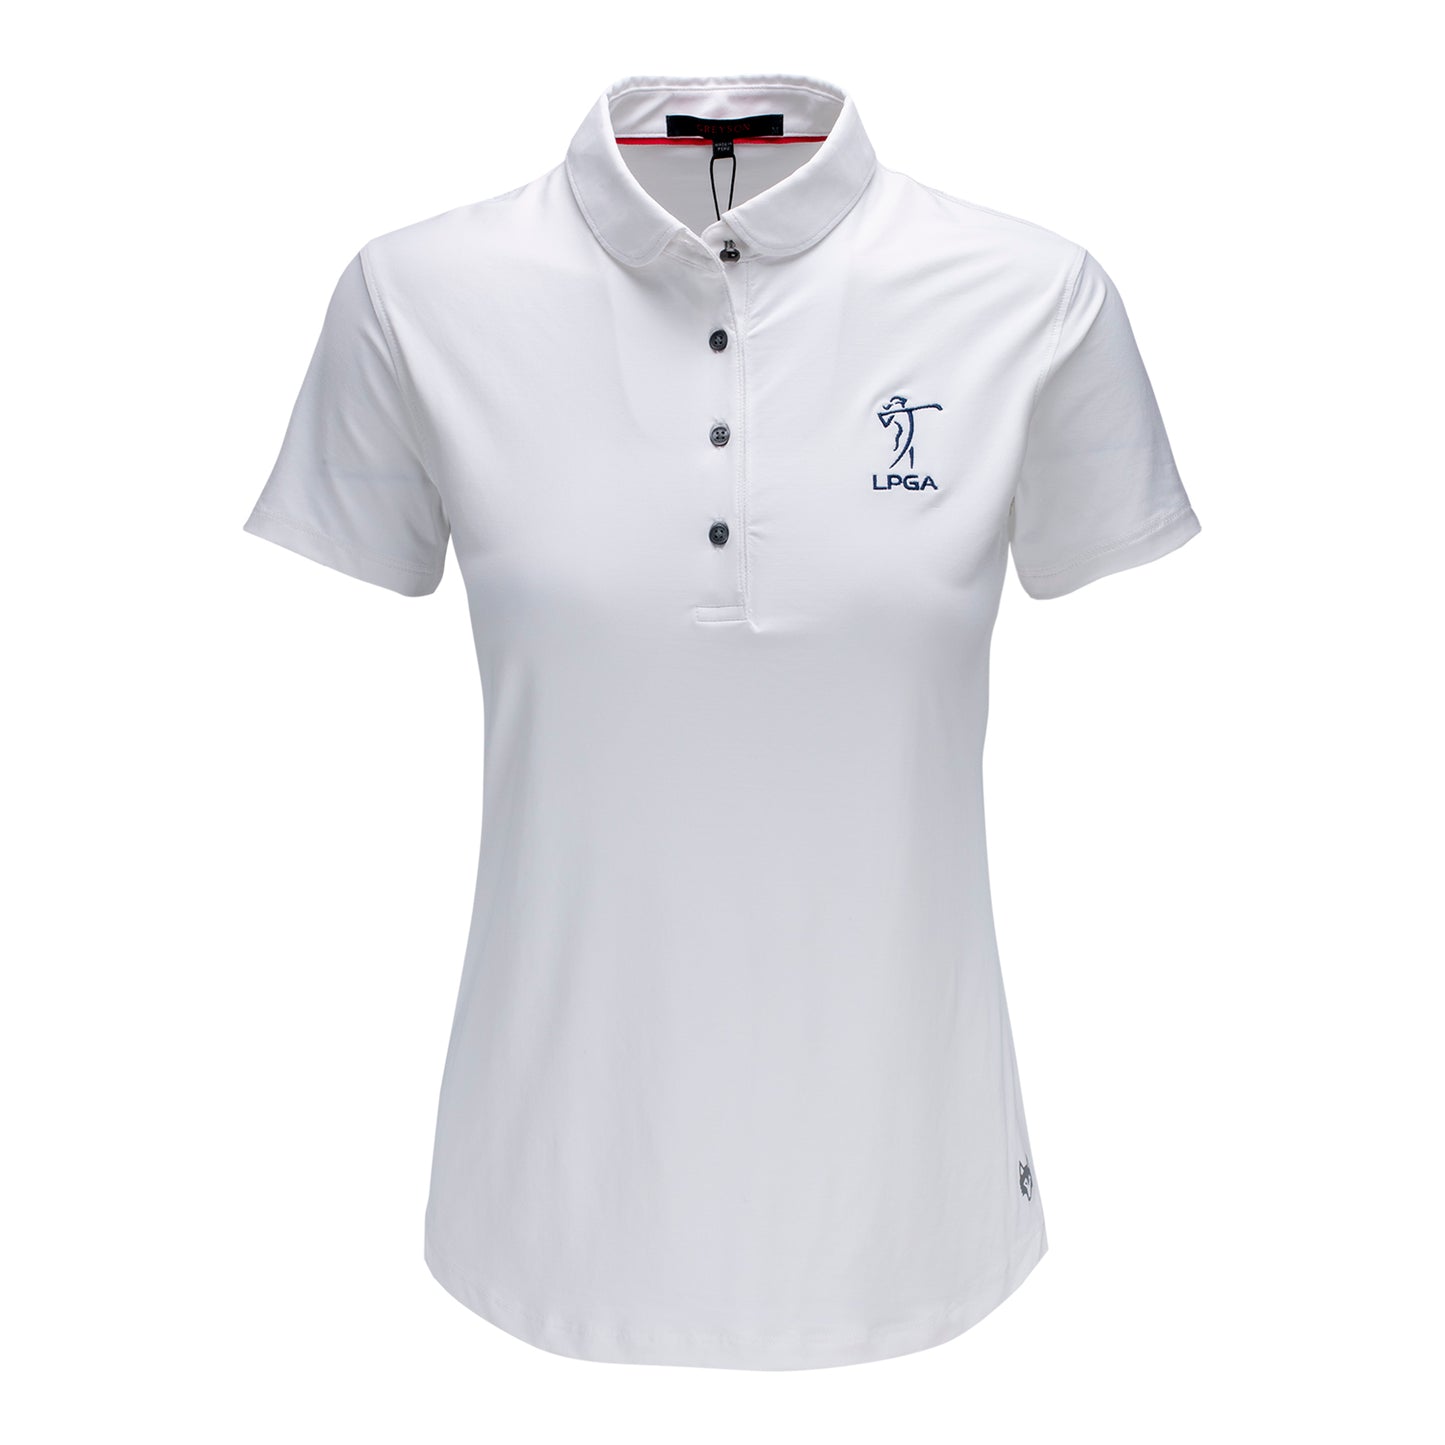 Greyson Clothiers 2023 LPGA Women's Scarlett Golf Polo